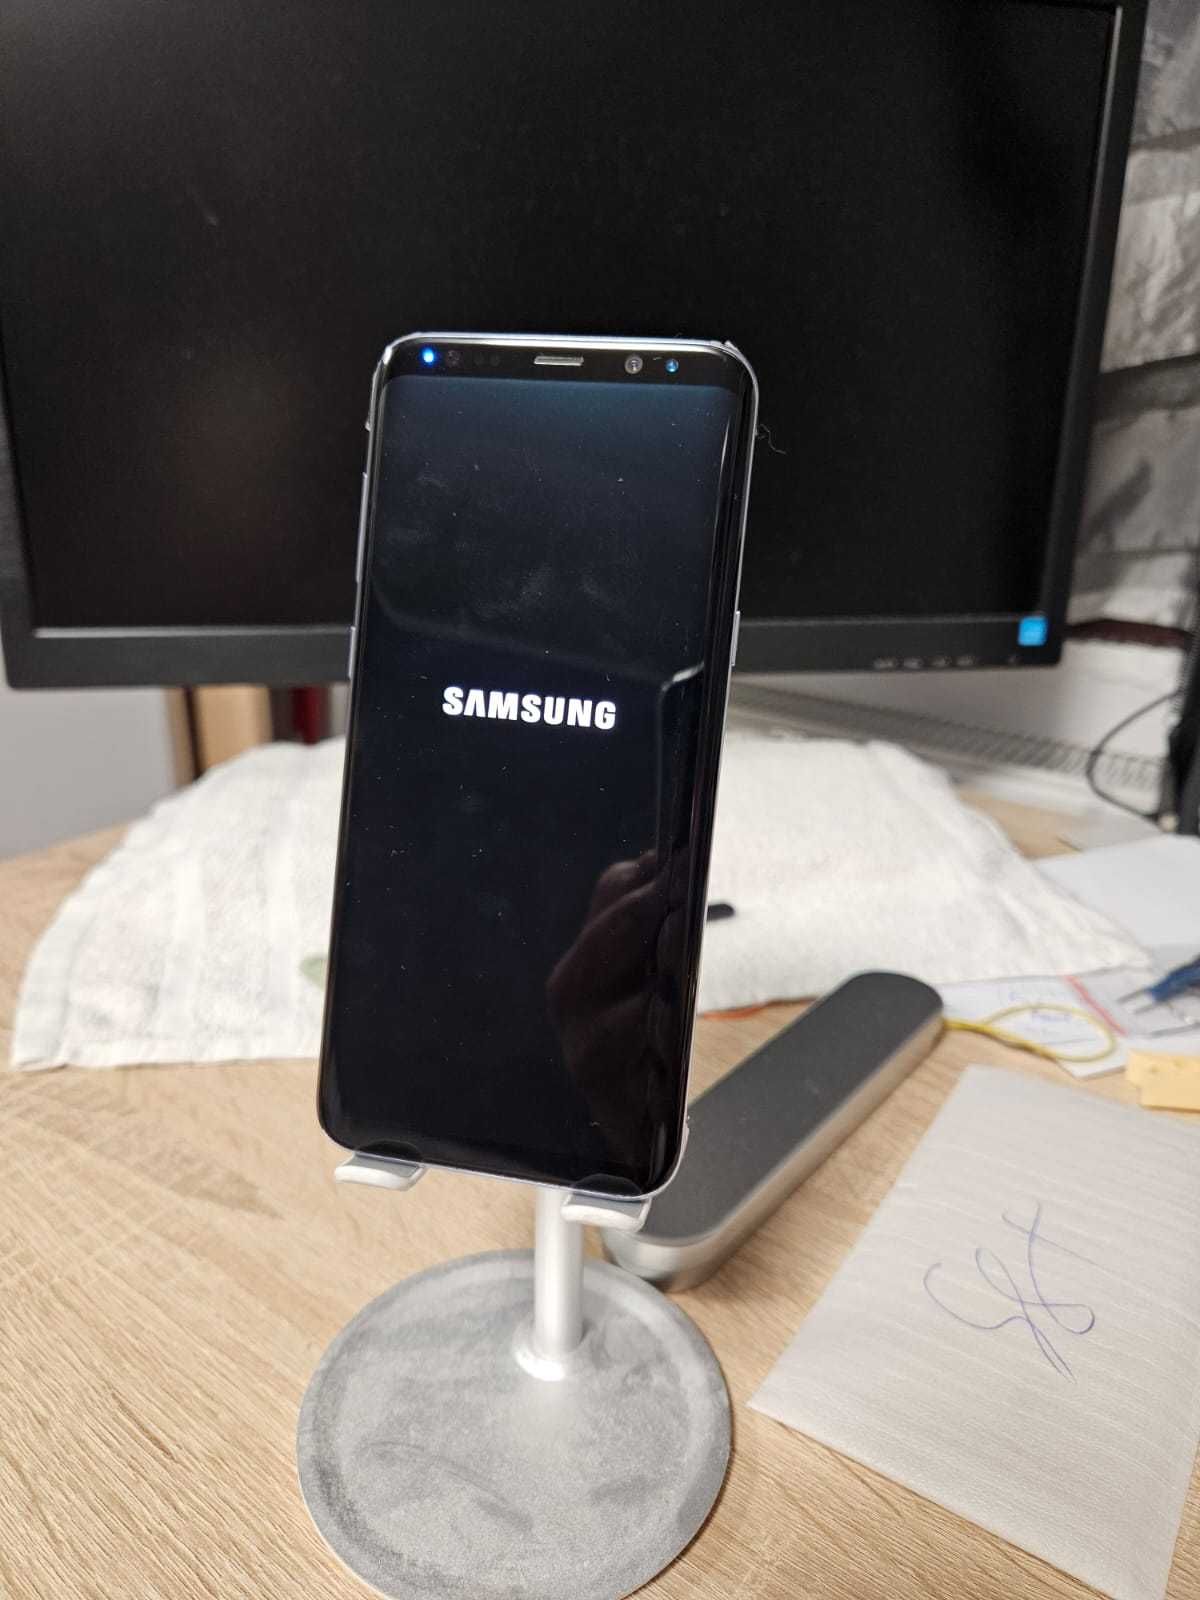 Samsung S8+ functionare f buna